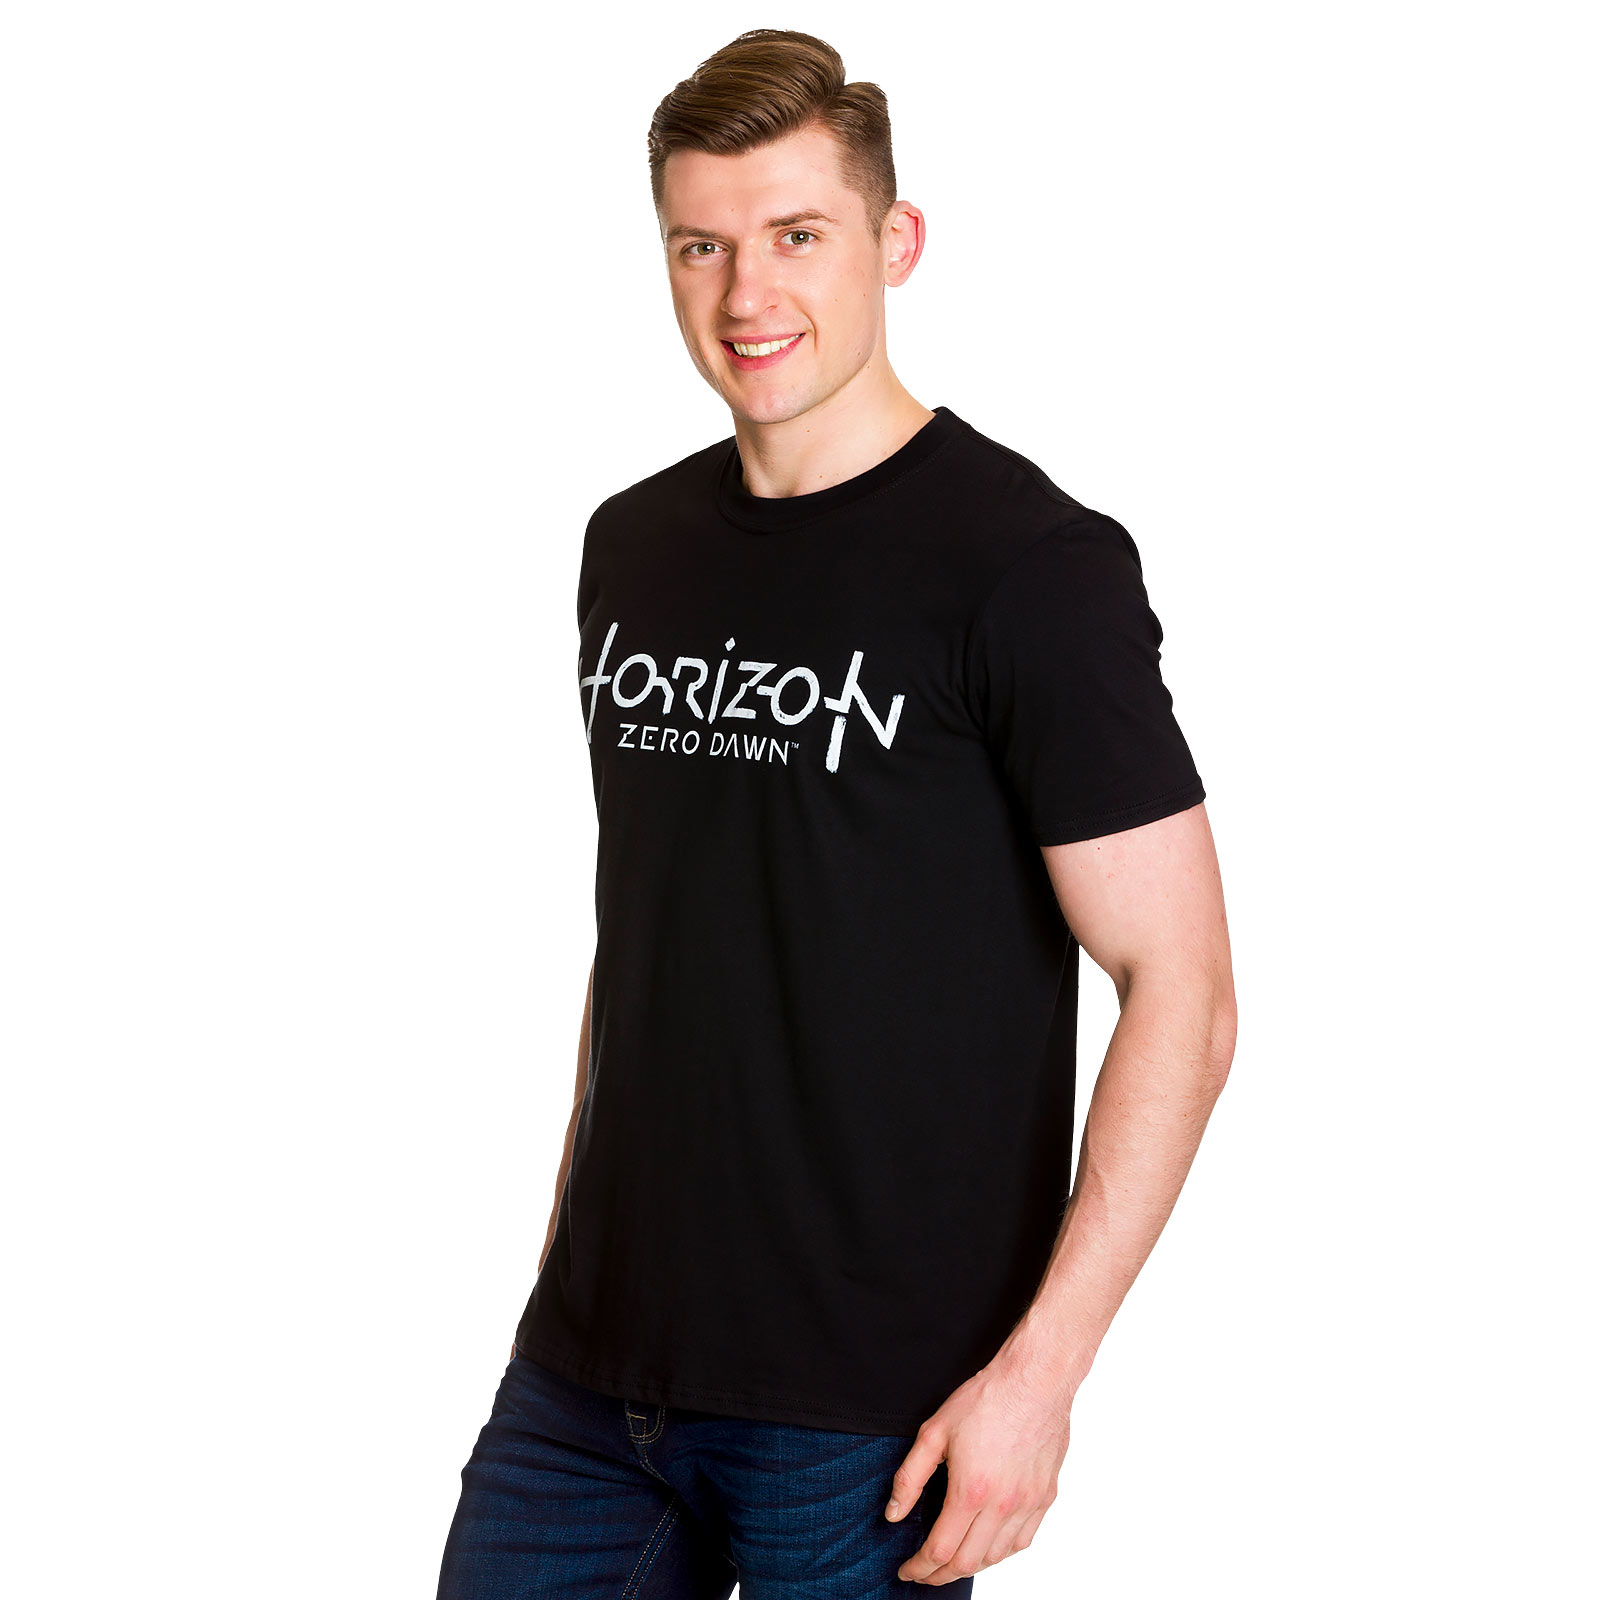 Horizon Zero Dawn - Logo T-Shirt Black